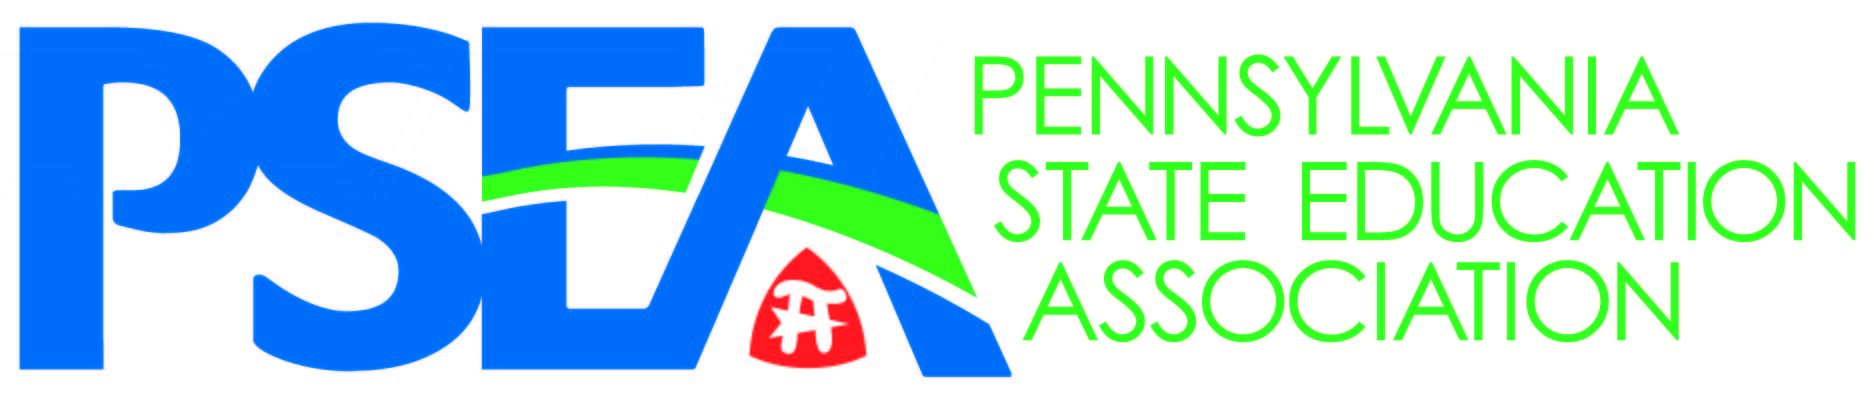 PSEA logo